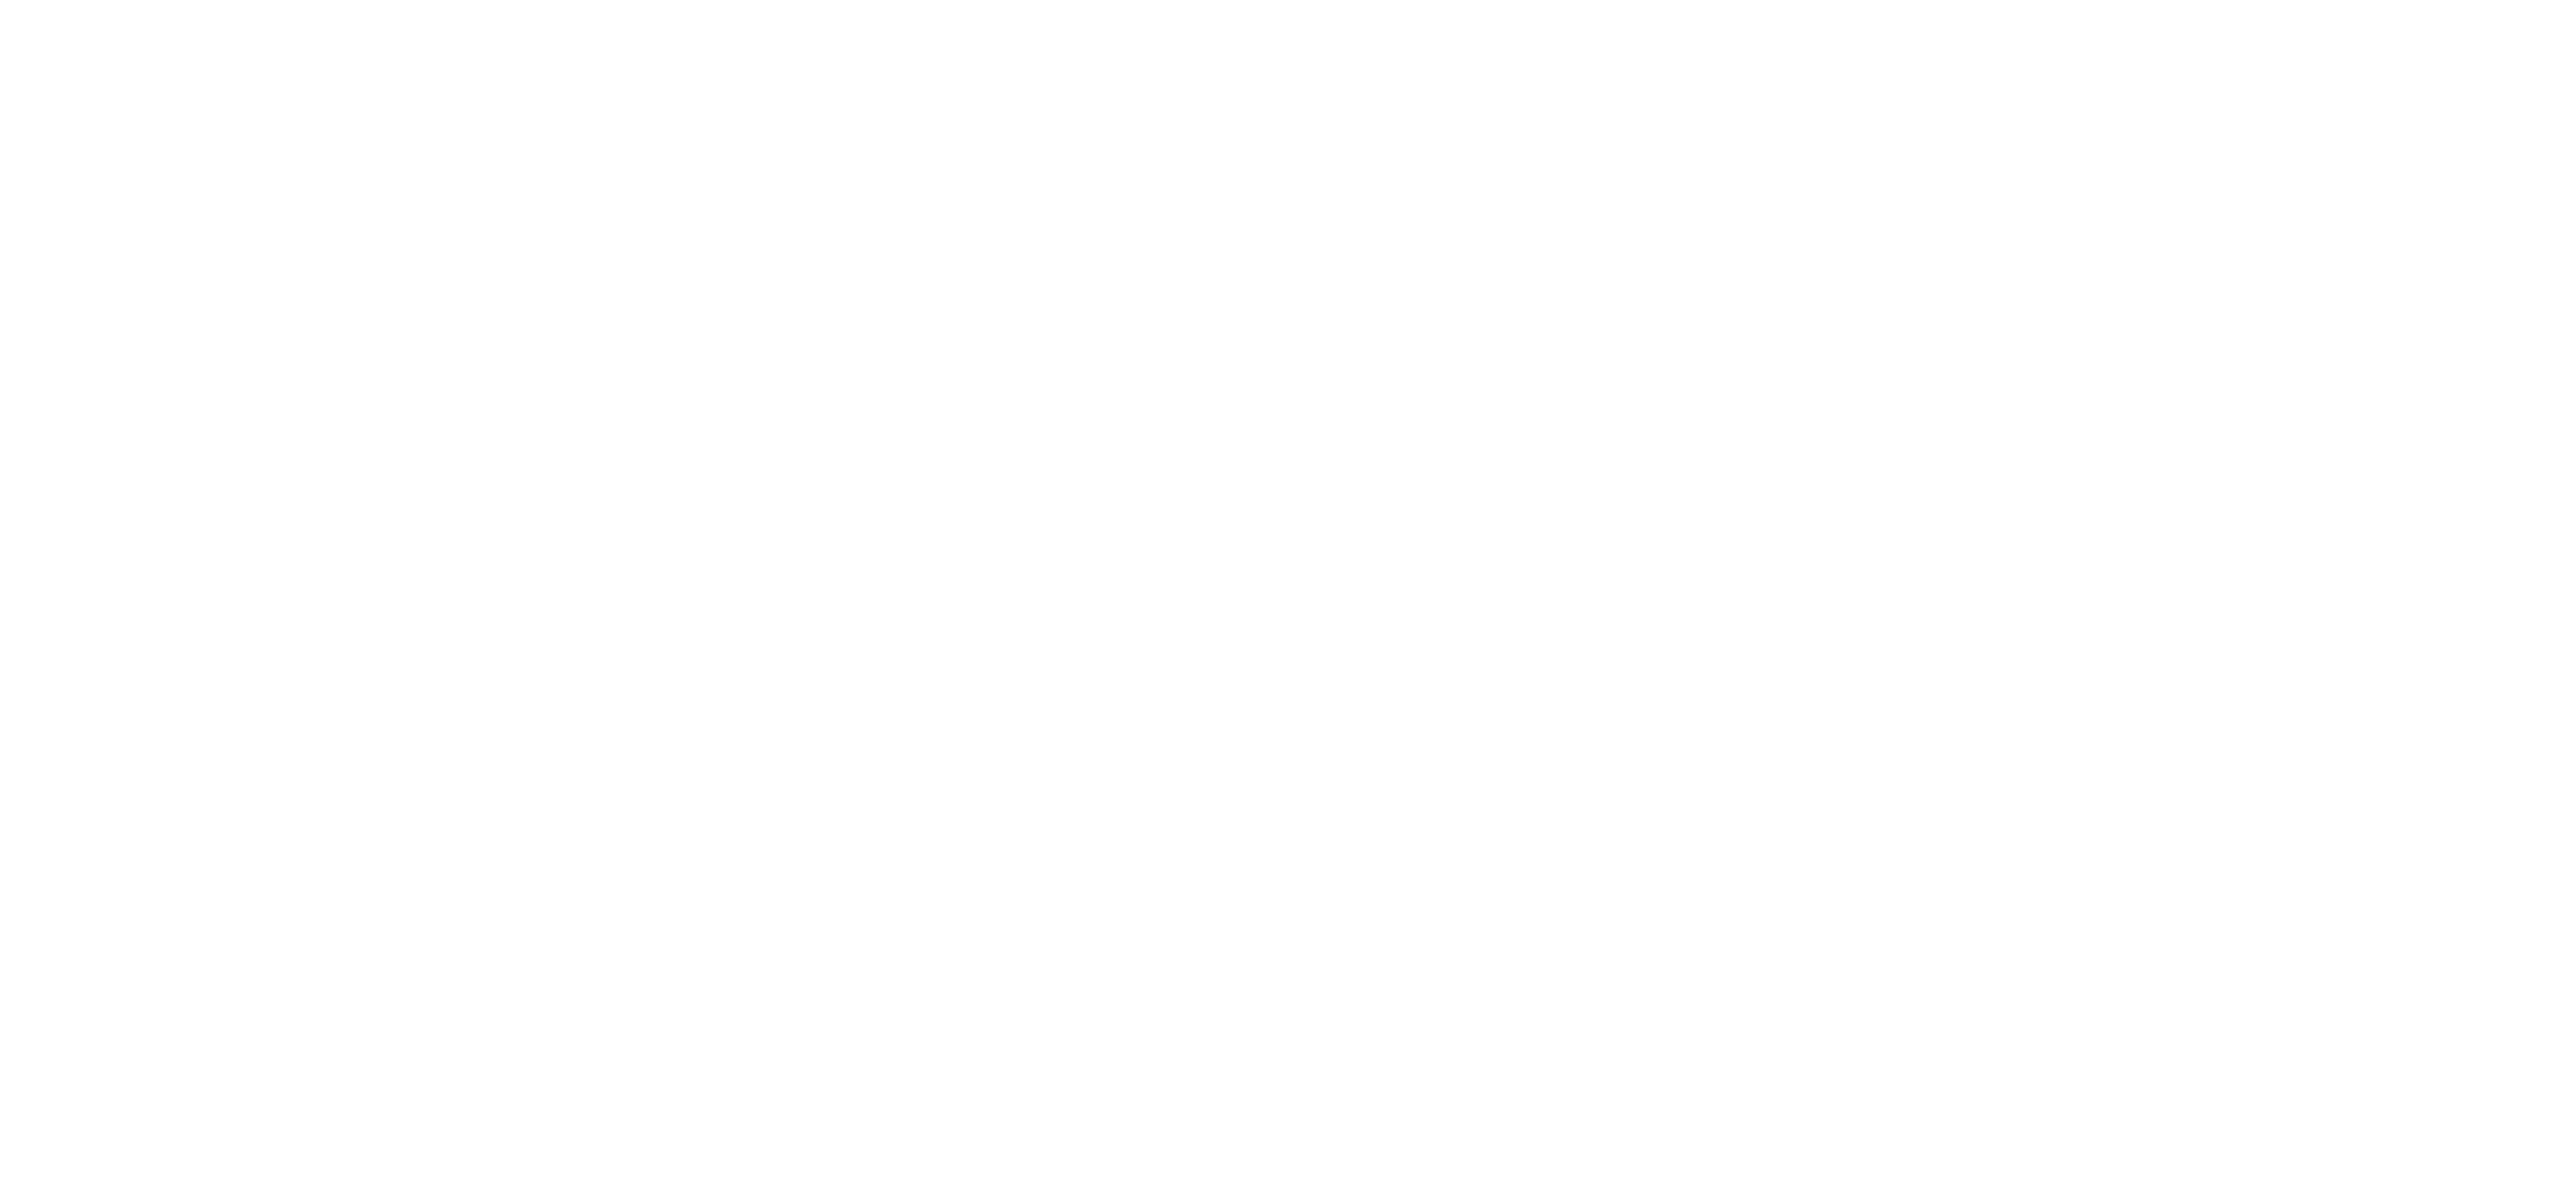 Dr. Jonny Verastegui. Advance Dentistry of El Paso. General, Cosmetic, Restorative, Preventative, Family Dentist, Periodontal Therapy, Endodontics, Implants, Oral Surgery, Extractions, Full Mouth Restoration, Emergency Dental, Smile Makeovers. Dentist in El Paso, TX 79928